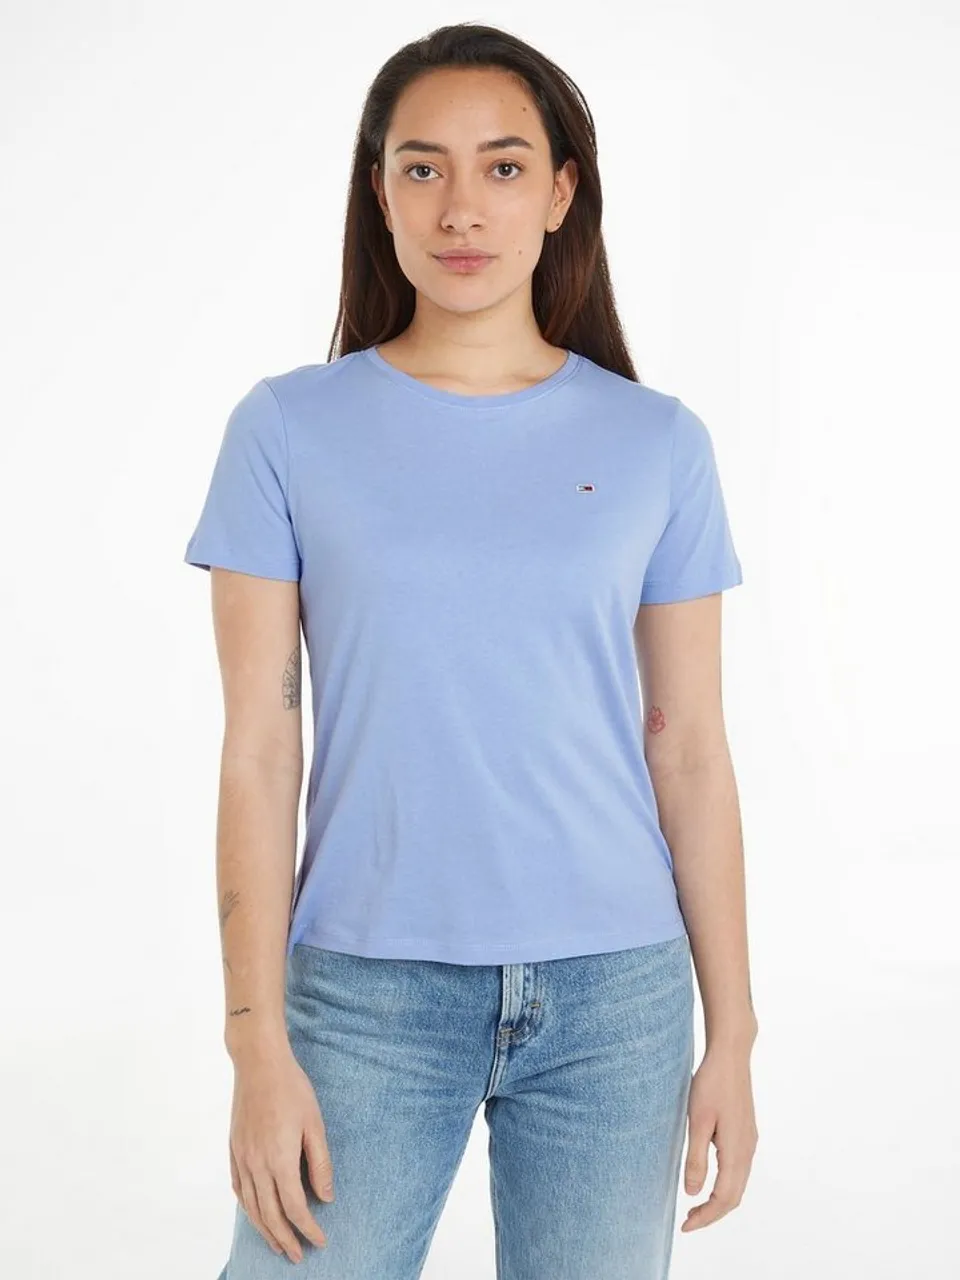 Tommy Jeans T-Shirt Soft Jersey T Shirt aus weicher Jersey Qualität Rundhals Kurzarm